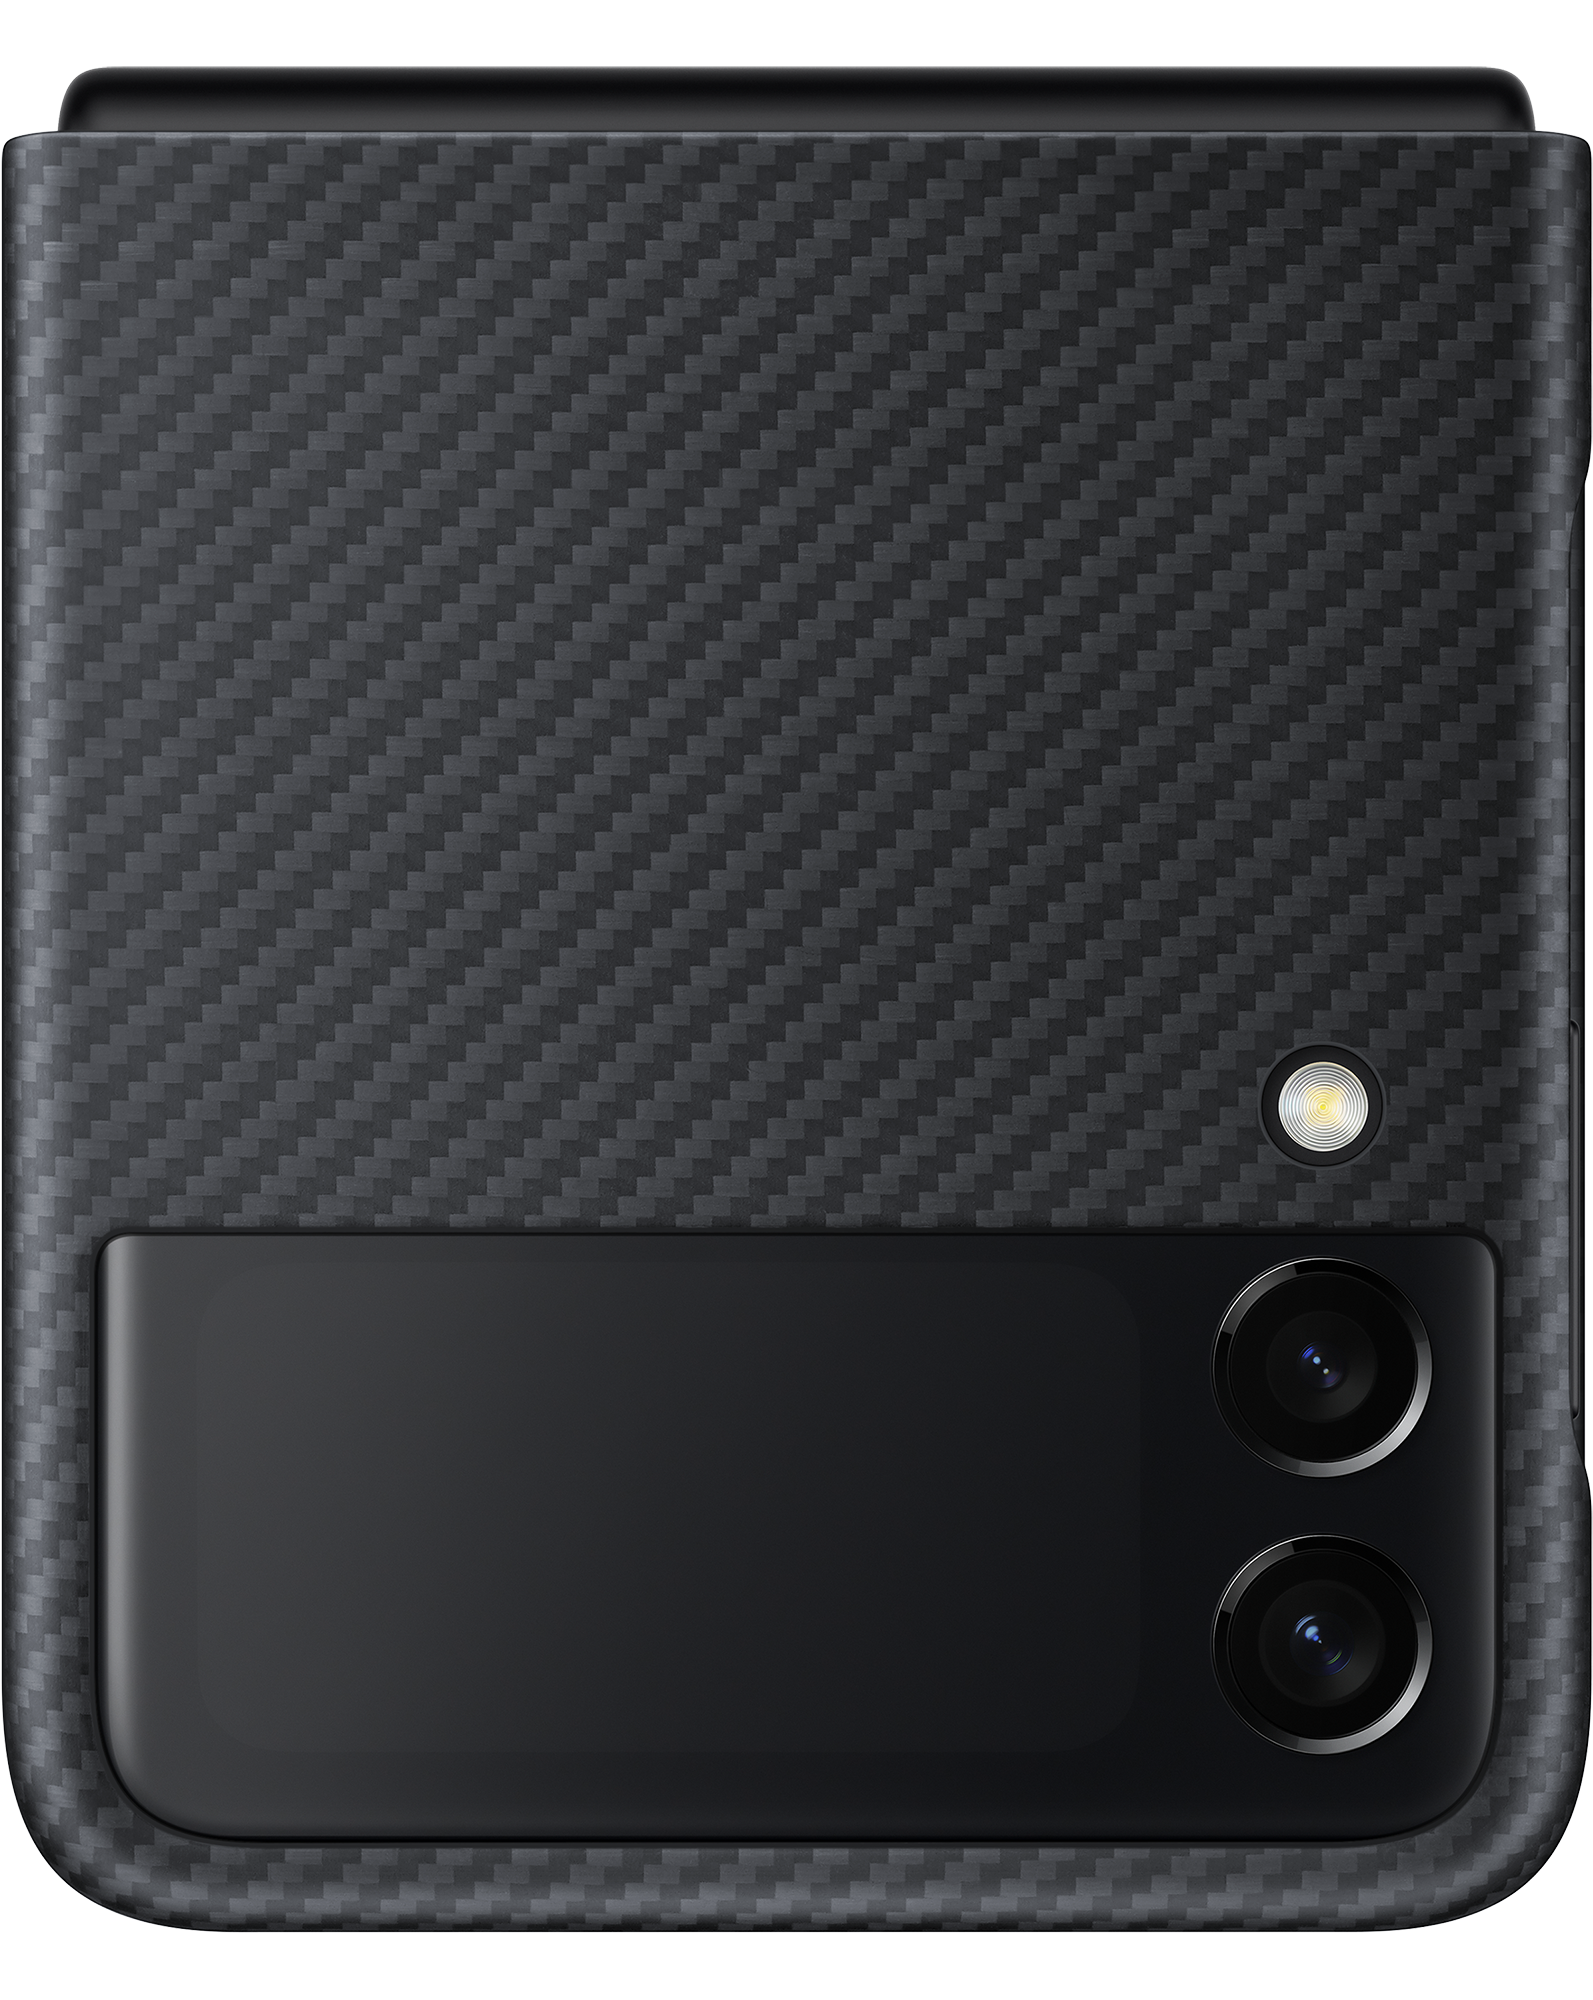 Samsung Galaxy Z Flip3 5G Aramid Cover Black